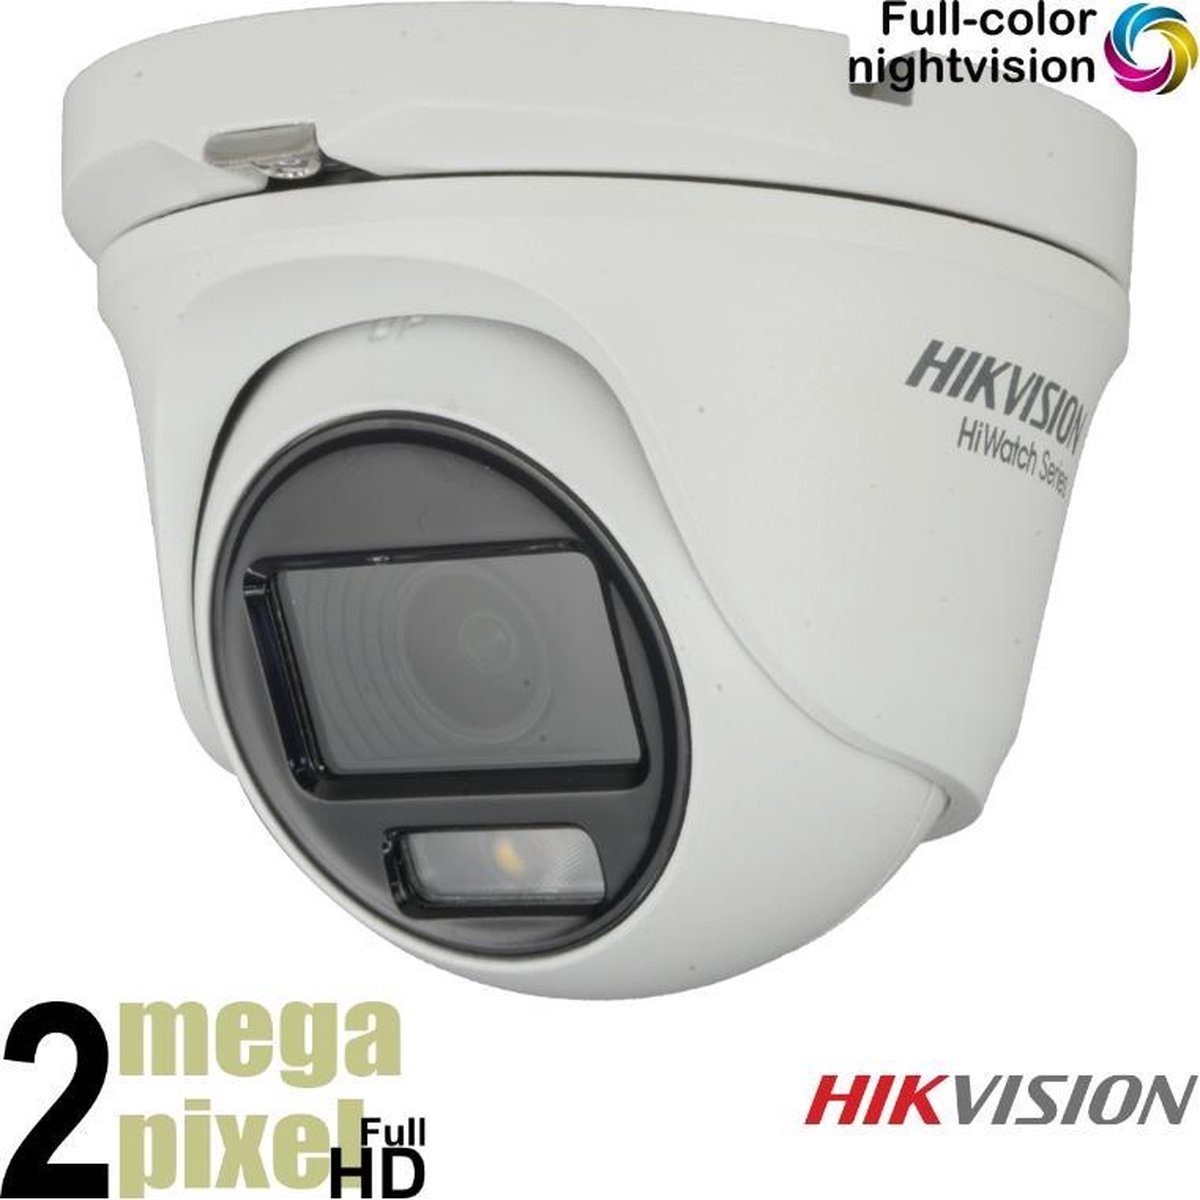 Hikvision Full Color - Dome Camera - 4 in 1 - Full HD - WDR - 20m Nachtzicht - Wit Licht - Goed Zichtbaar - Werkt Preventief - Beveiligingscamera